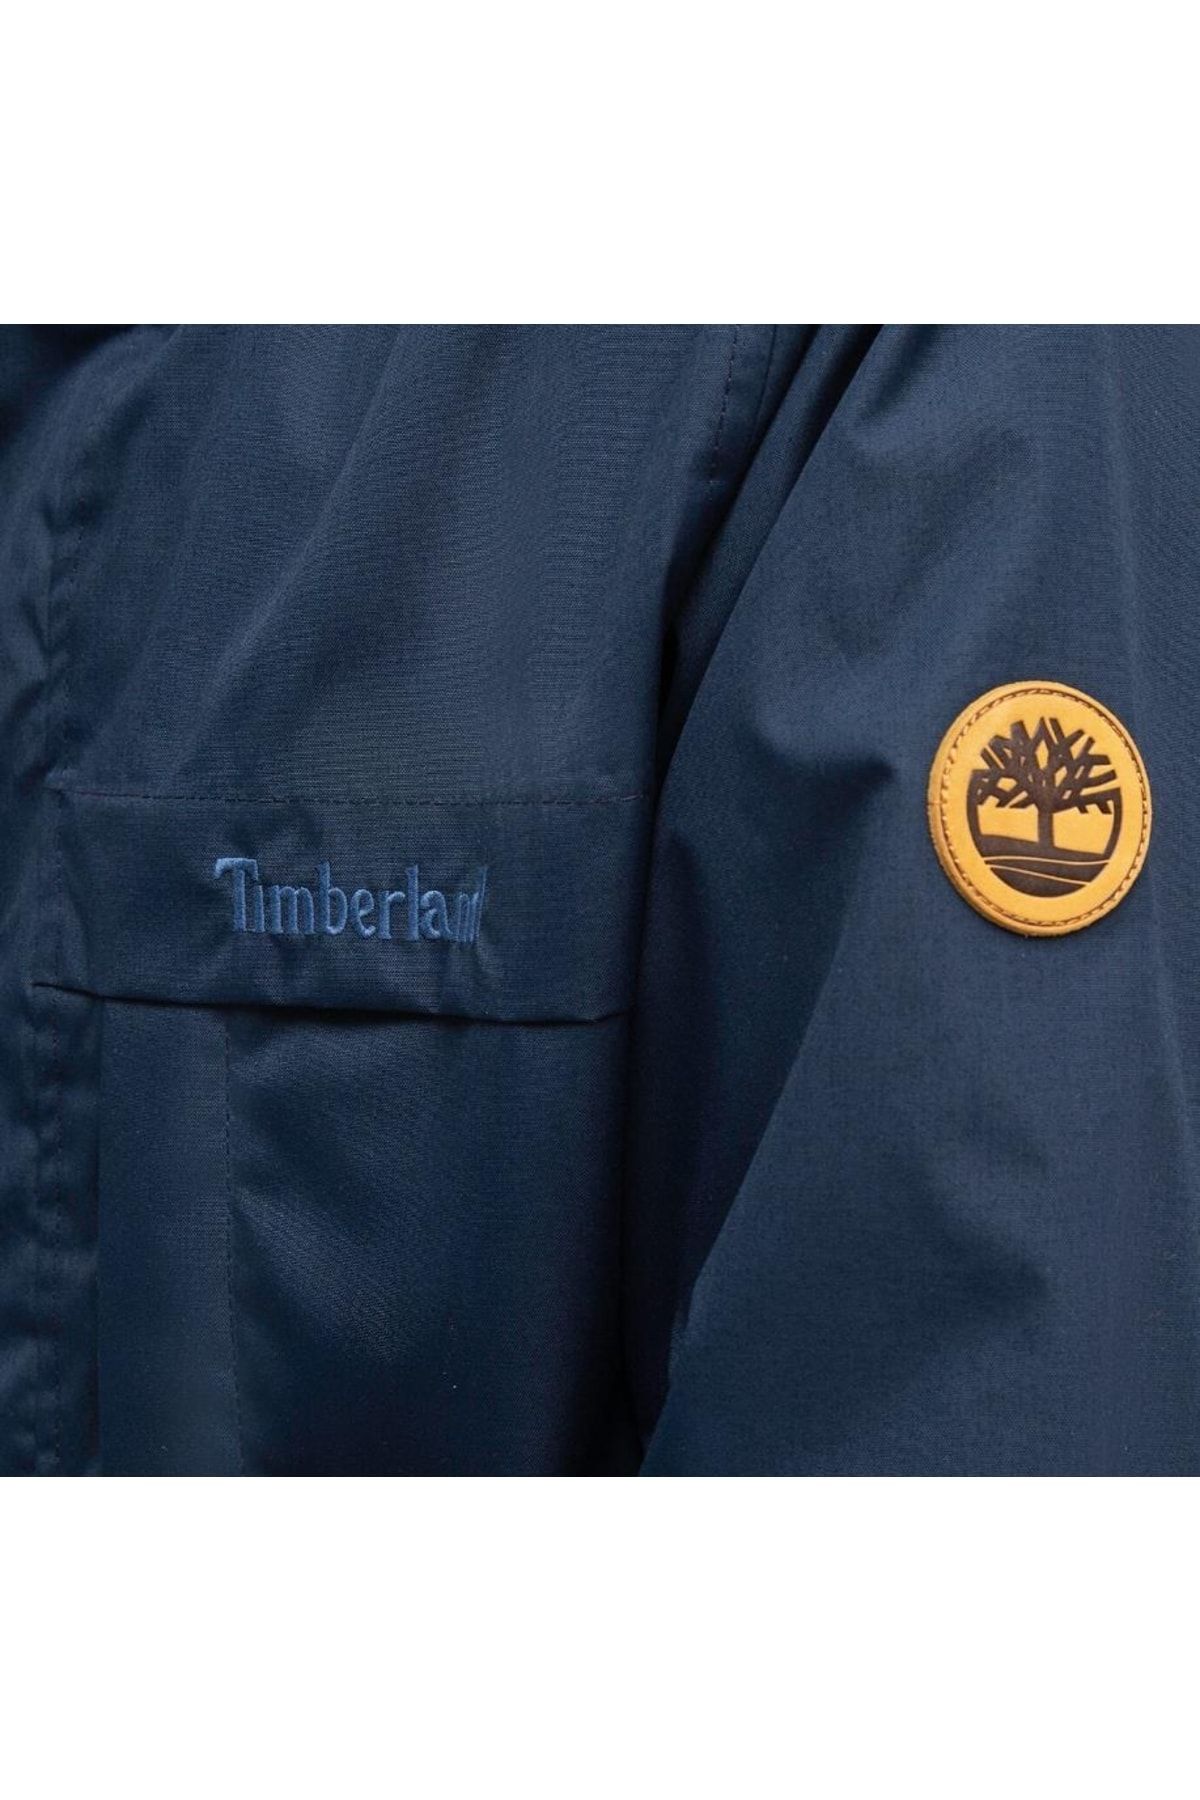 Timberland پوسته مقاوم در برابر آب J Tb0a5xrs4331